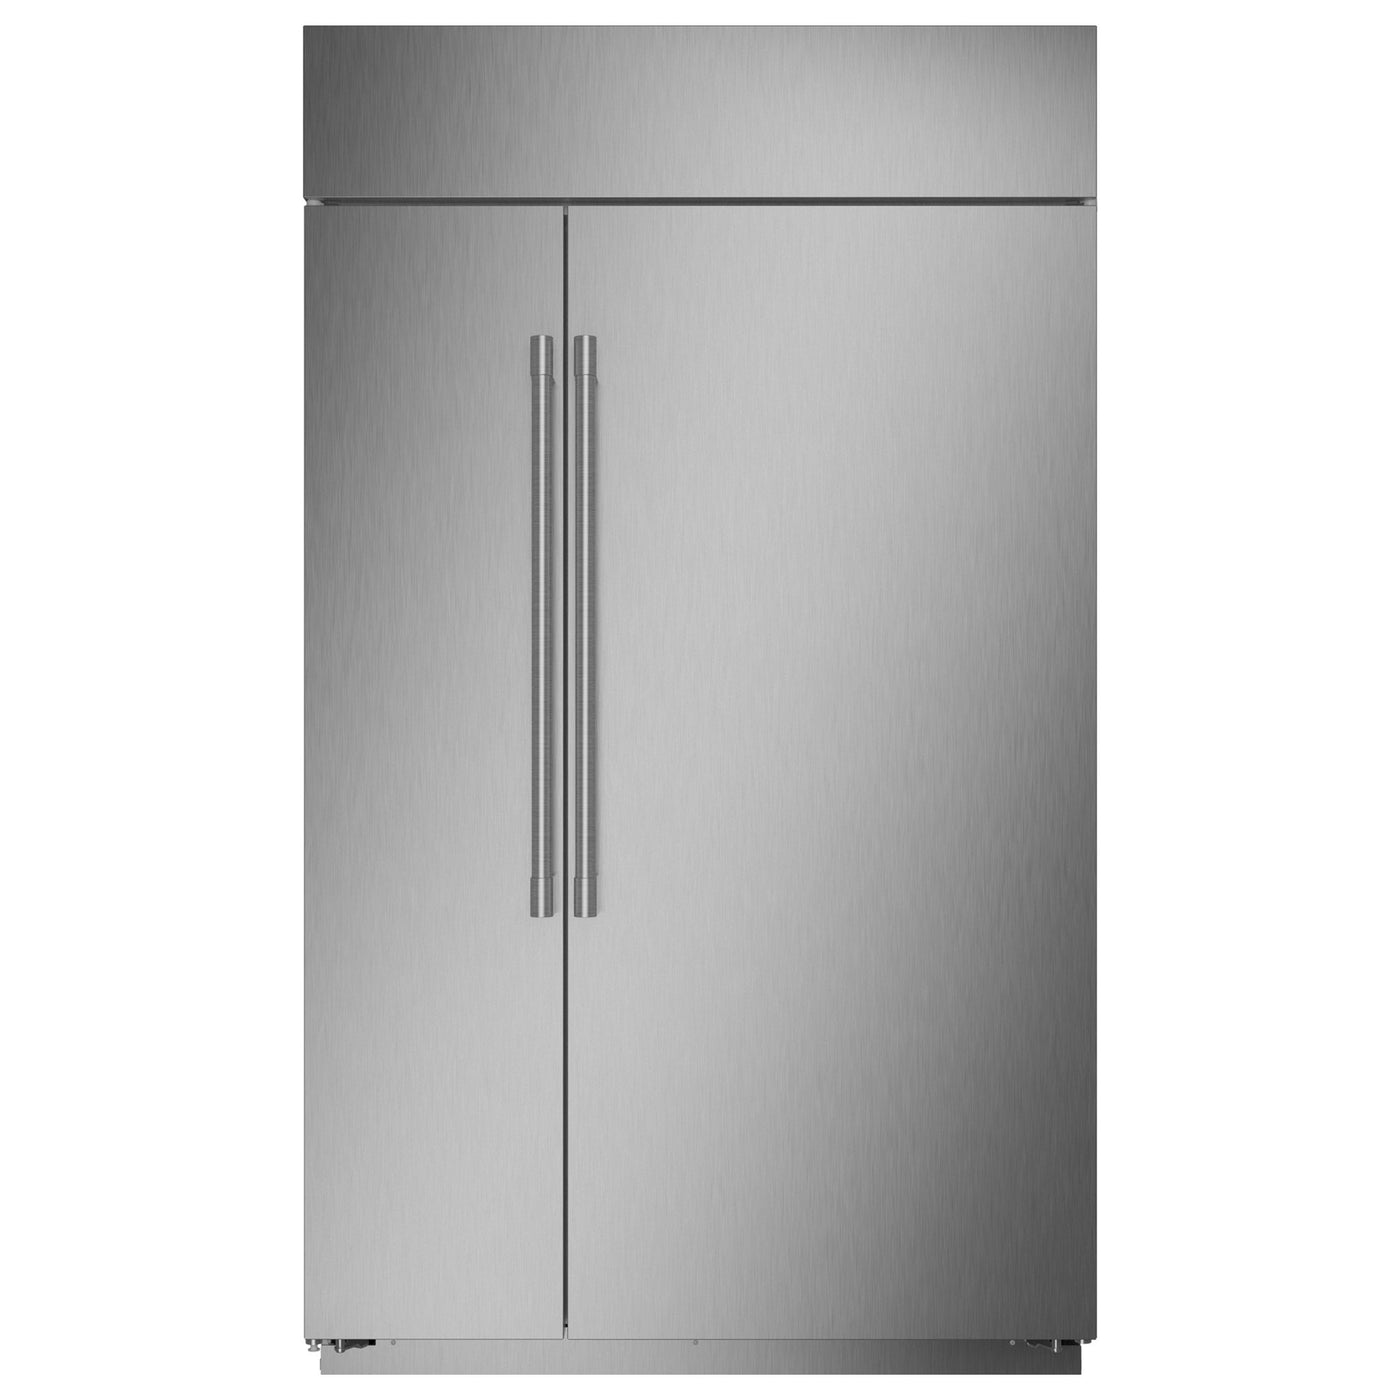 GE-Monogram-Refrigerator-ZISS480NNSS